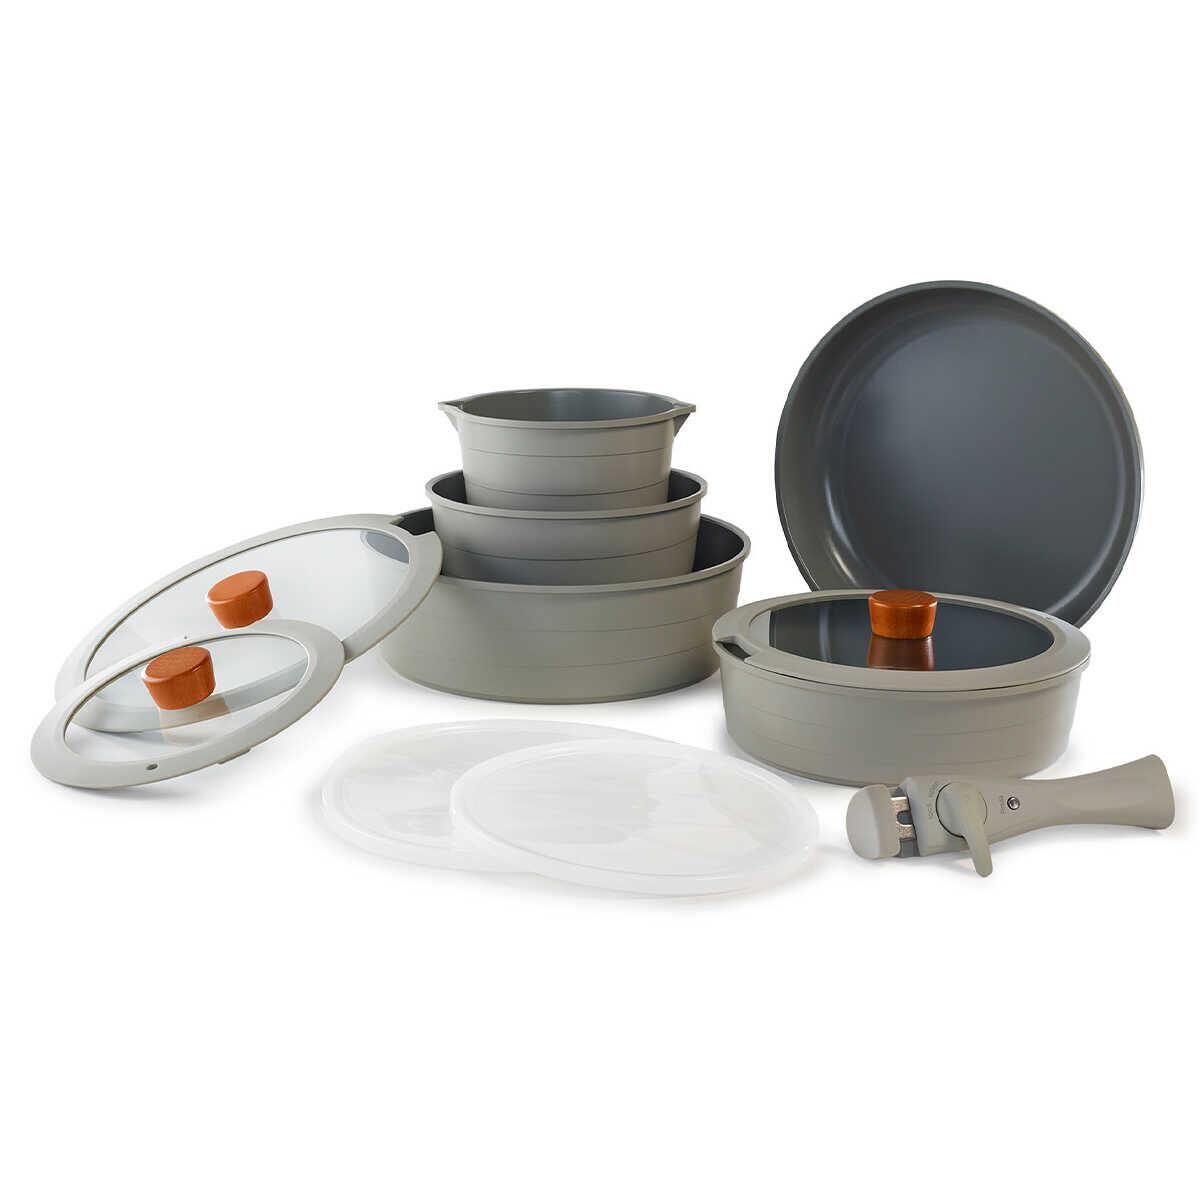 Pot and Pan Set with Detachable Handle